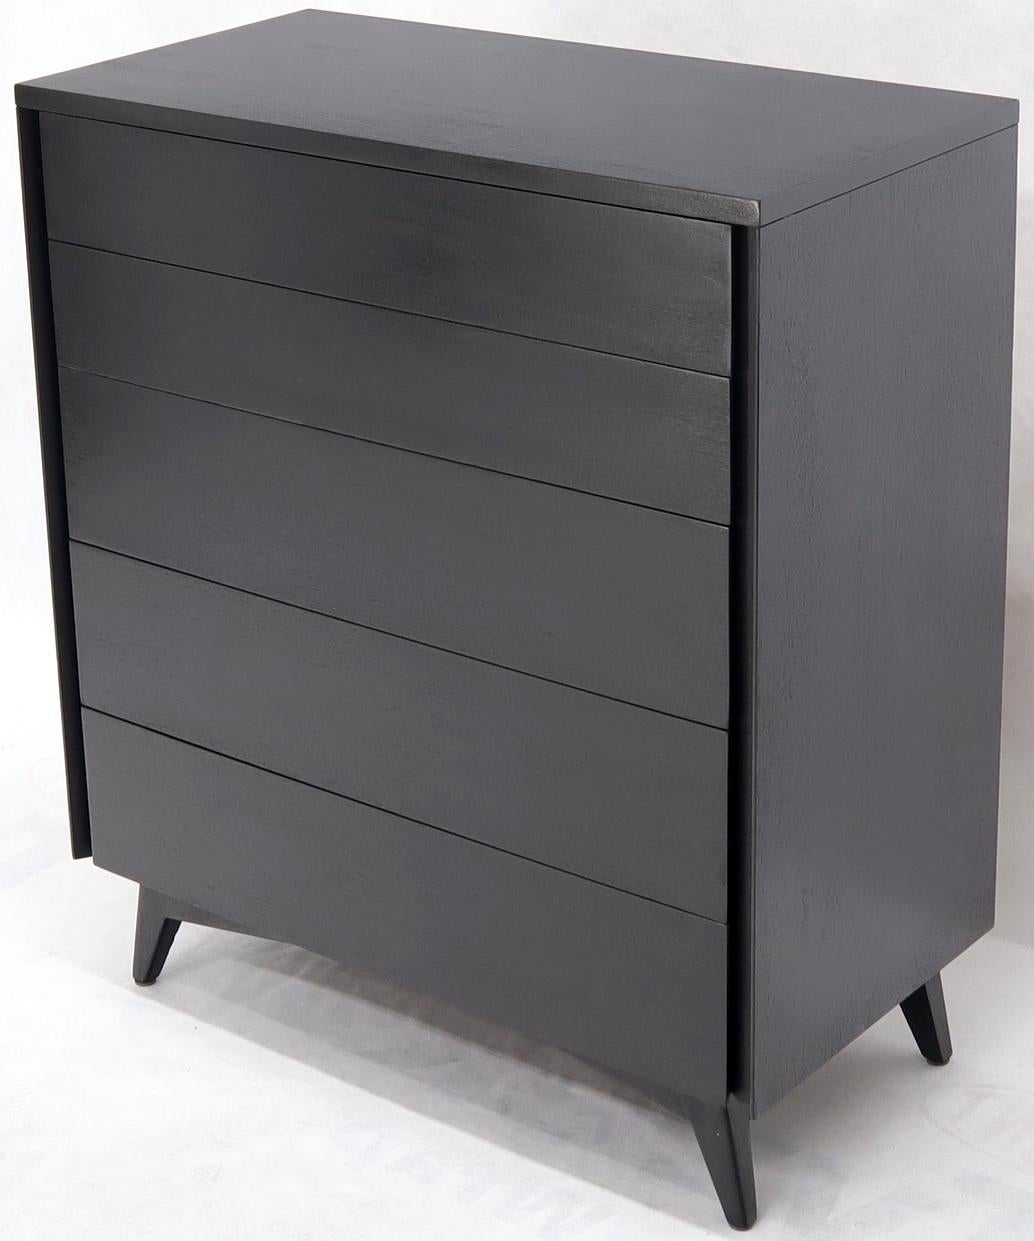 Mid-Century Modern five drawers black lacquer high chest dresser by John Stuart.